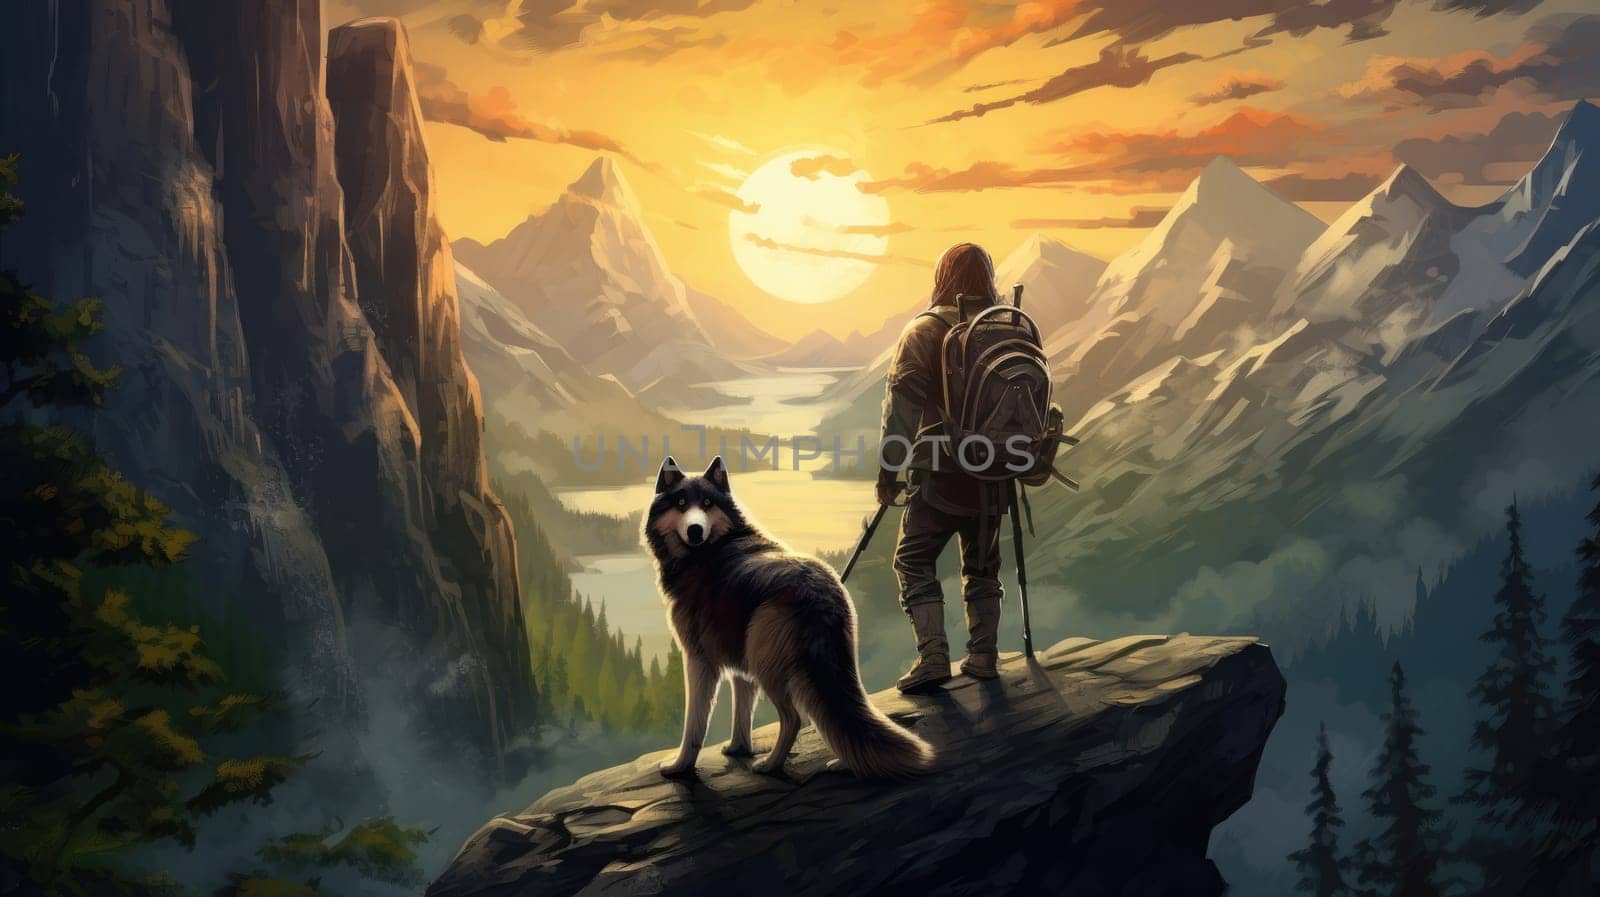 Hiking with husky photo realistic illustration - AI generated. Husky, dog, man, mountain, sunset.